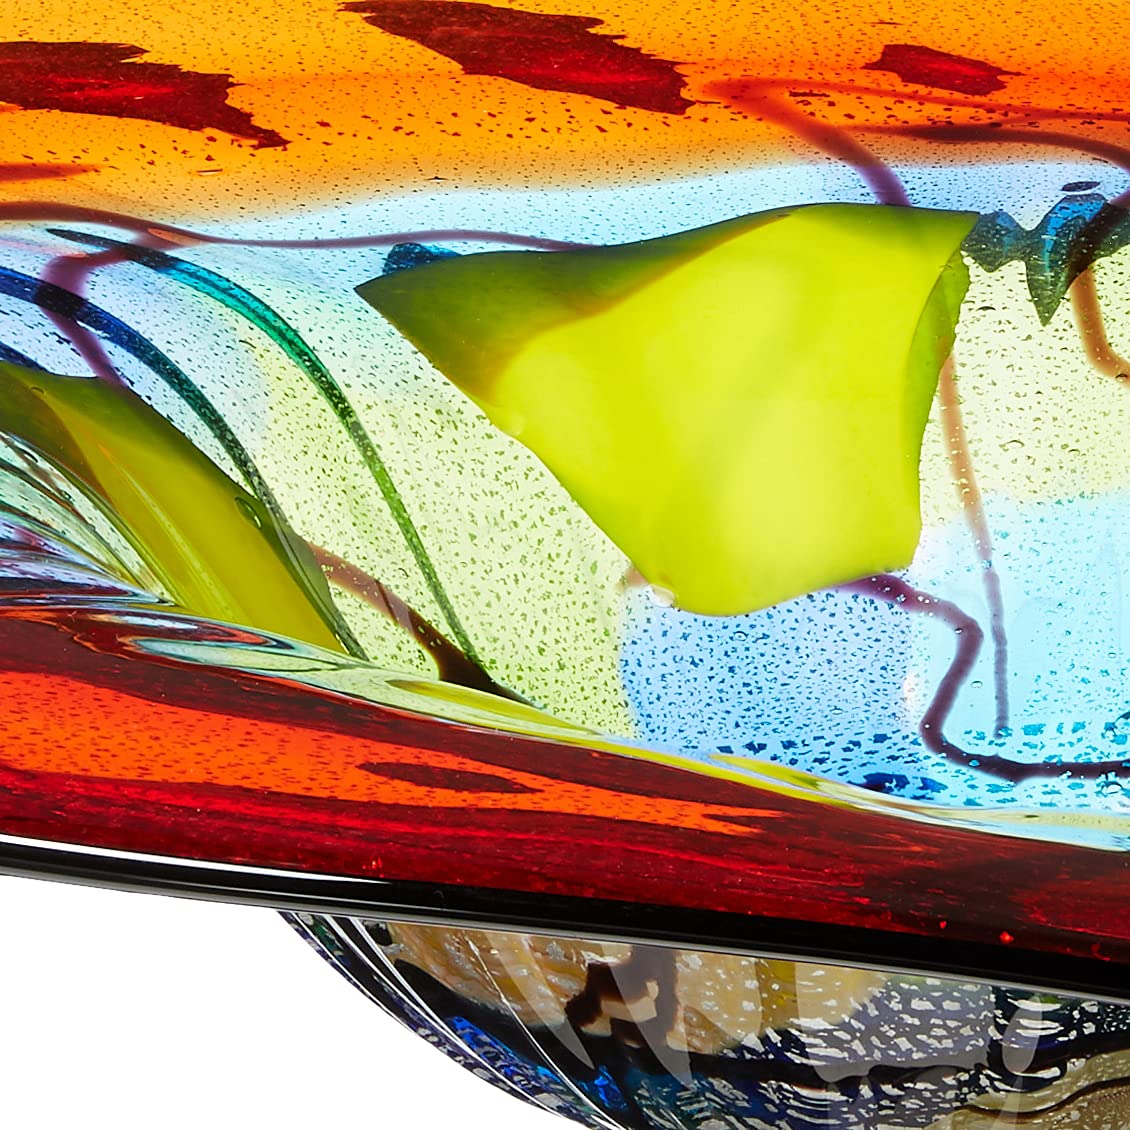 Dale Tiffany Hankley Art Glass Wal Decor Plate,5.00x20.00x20.00